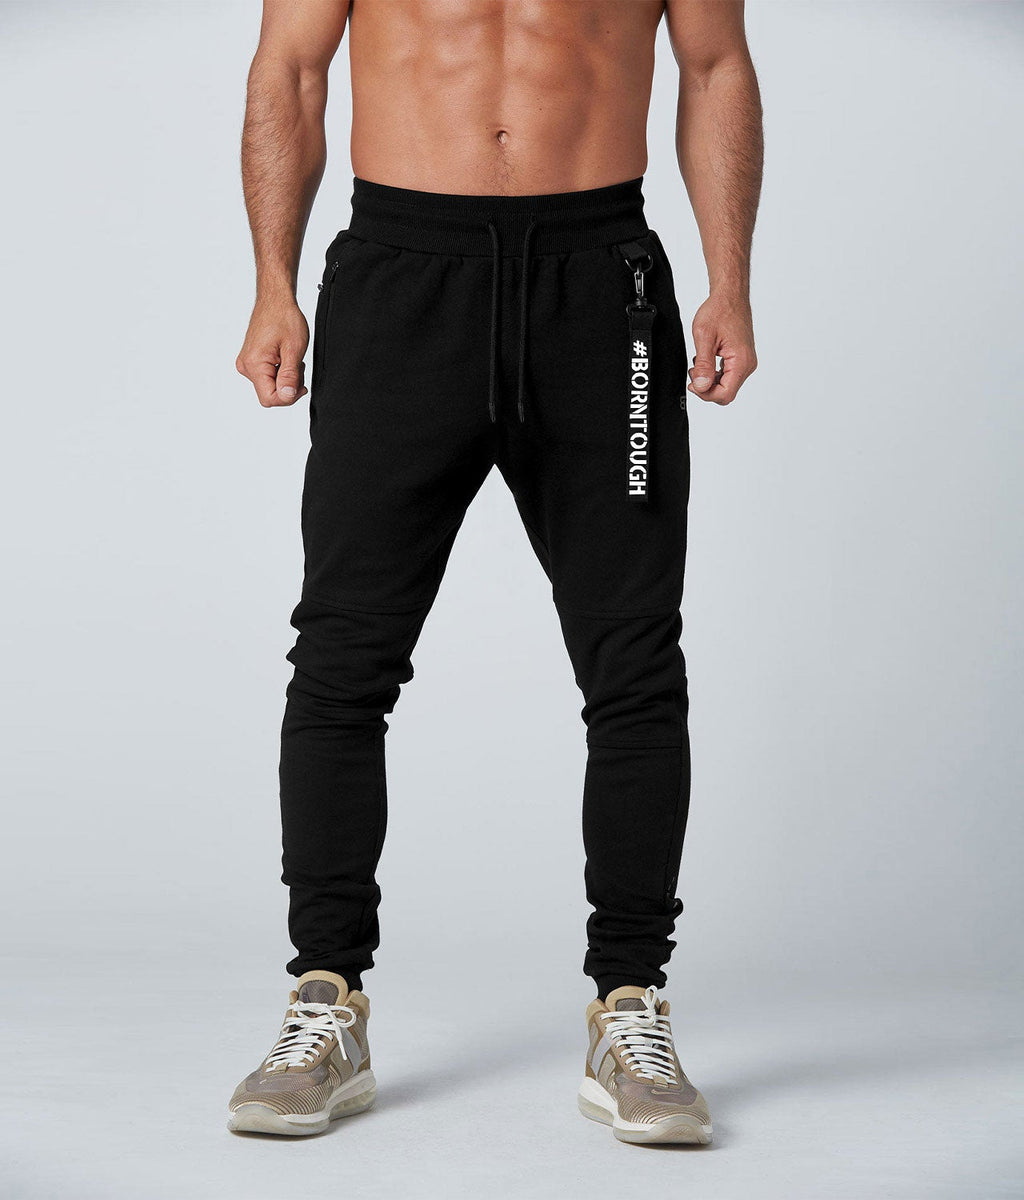 Born Tough Core Fit Zippered Black Gym Workout Pant for Men - Born Tough